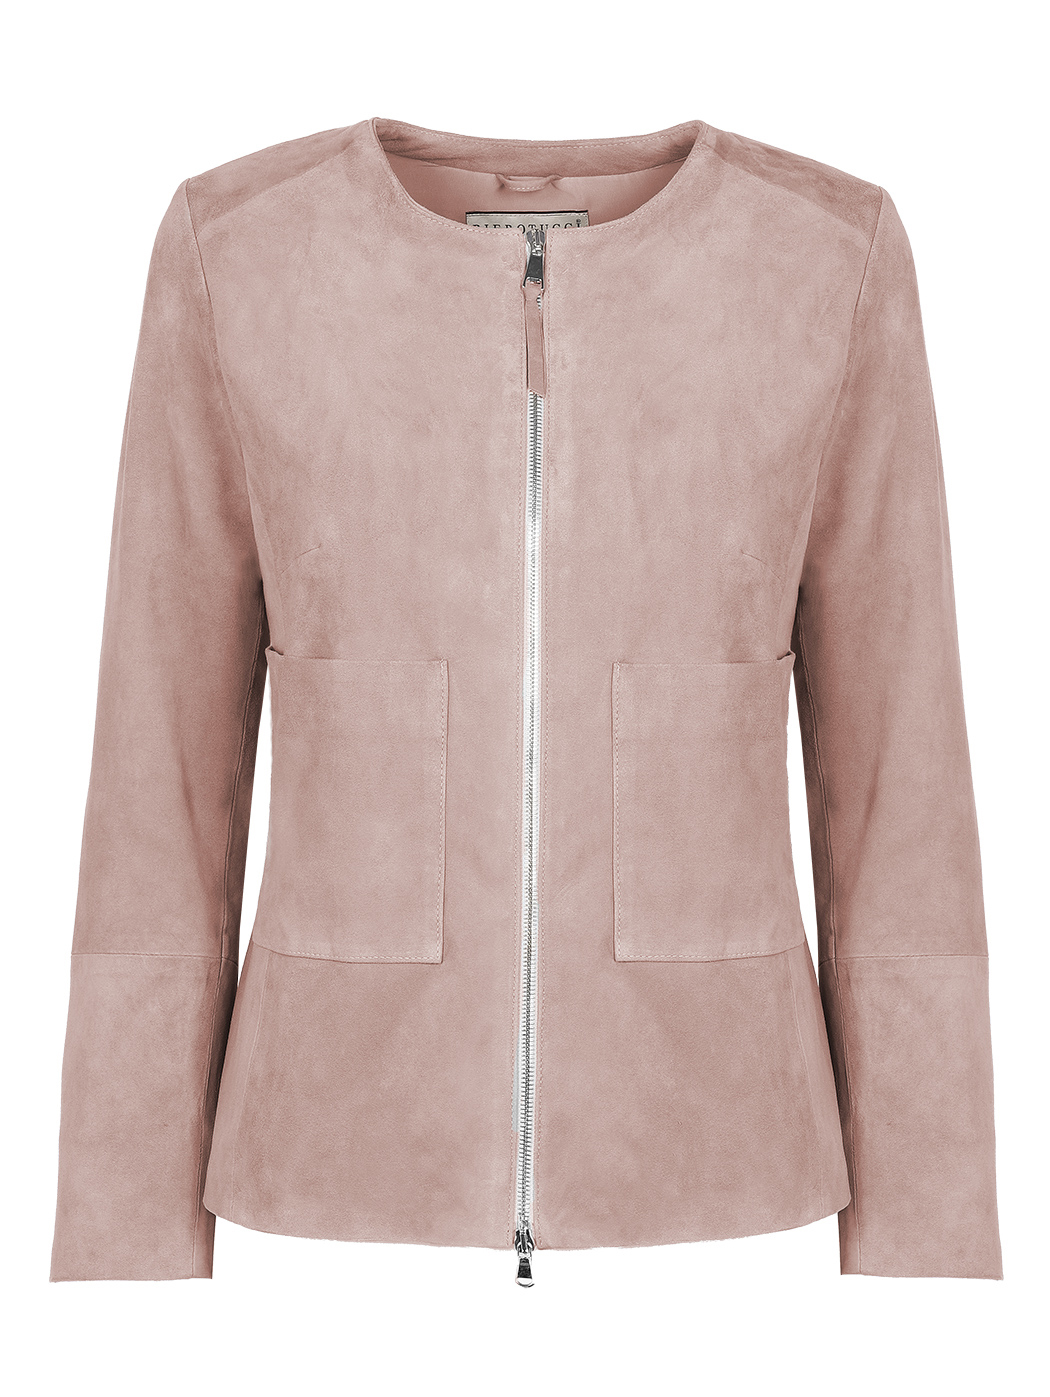 Замшевая куртка на молнии нежно - розового цвета